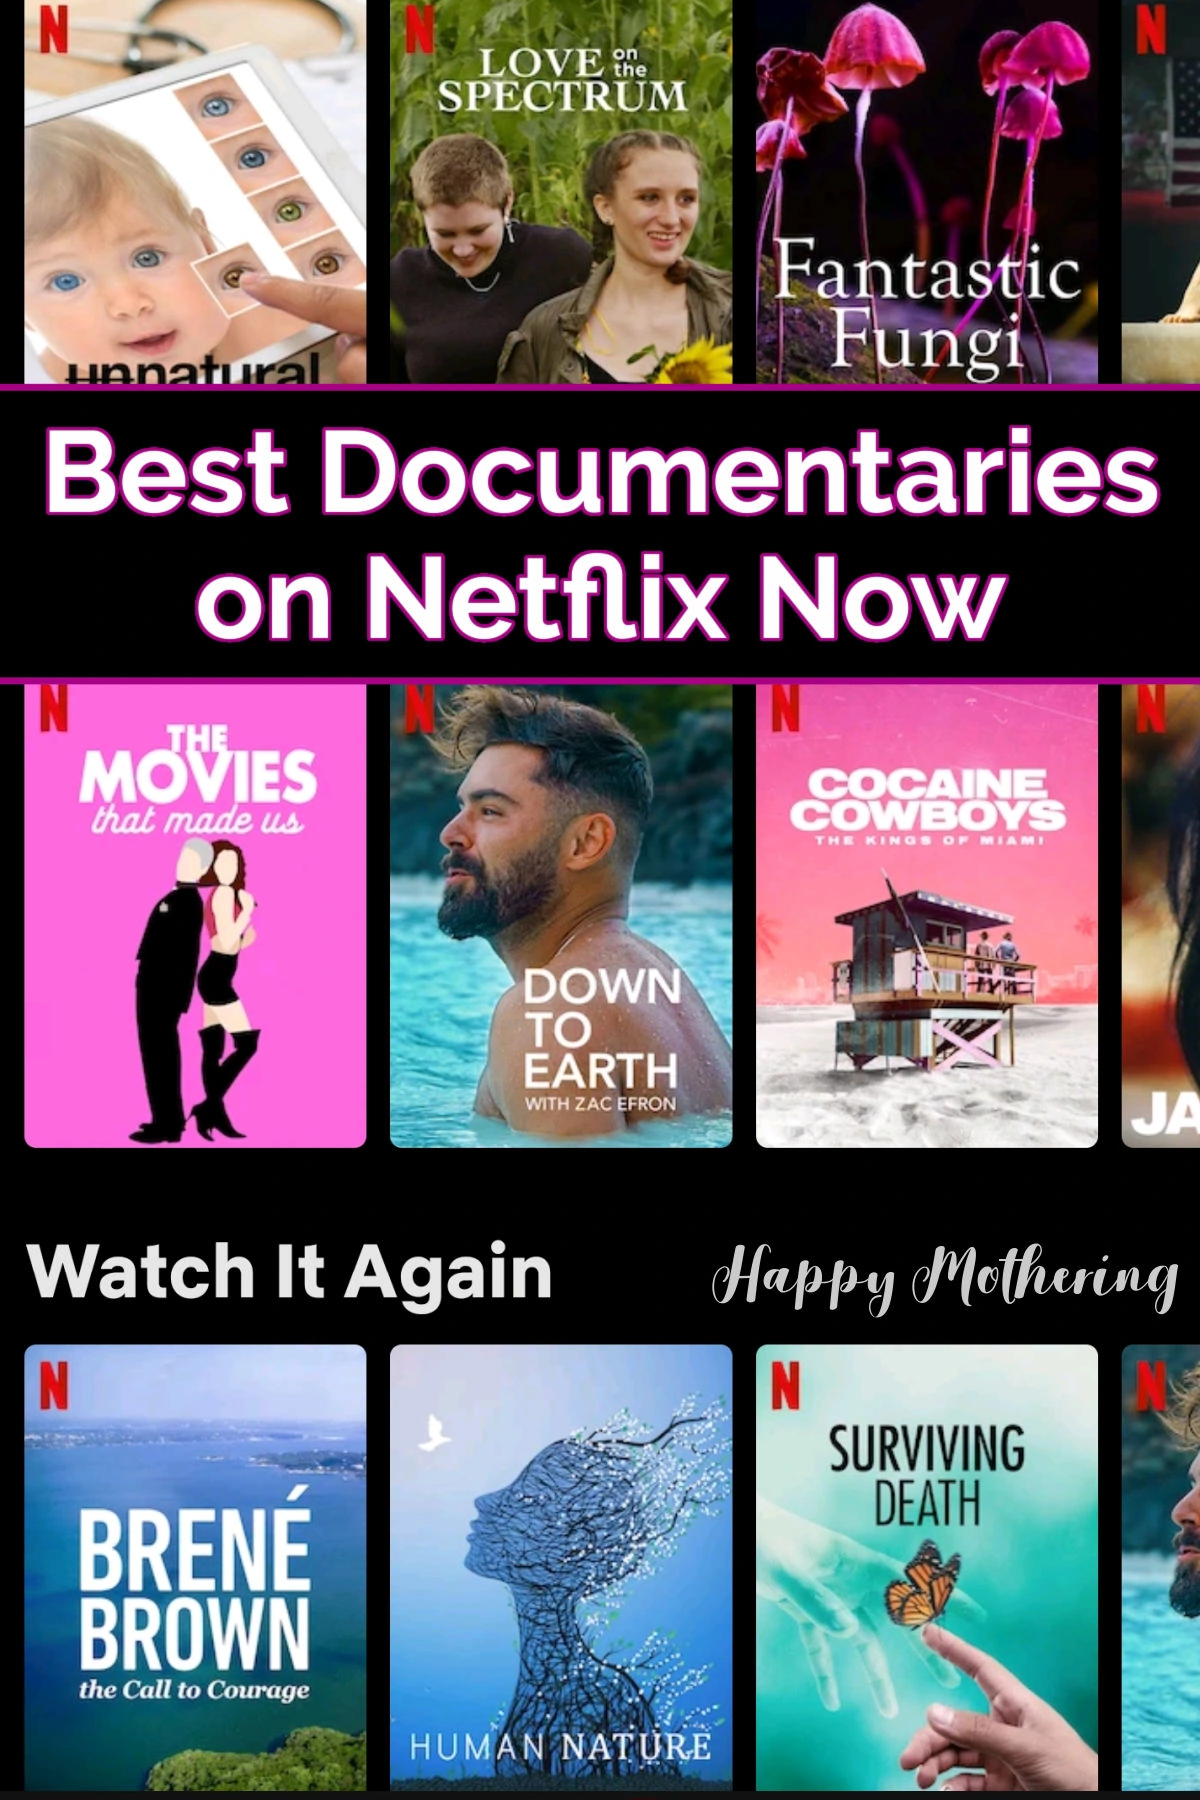 Screenshot of documentaries on Netflix now from app.